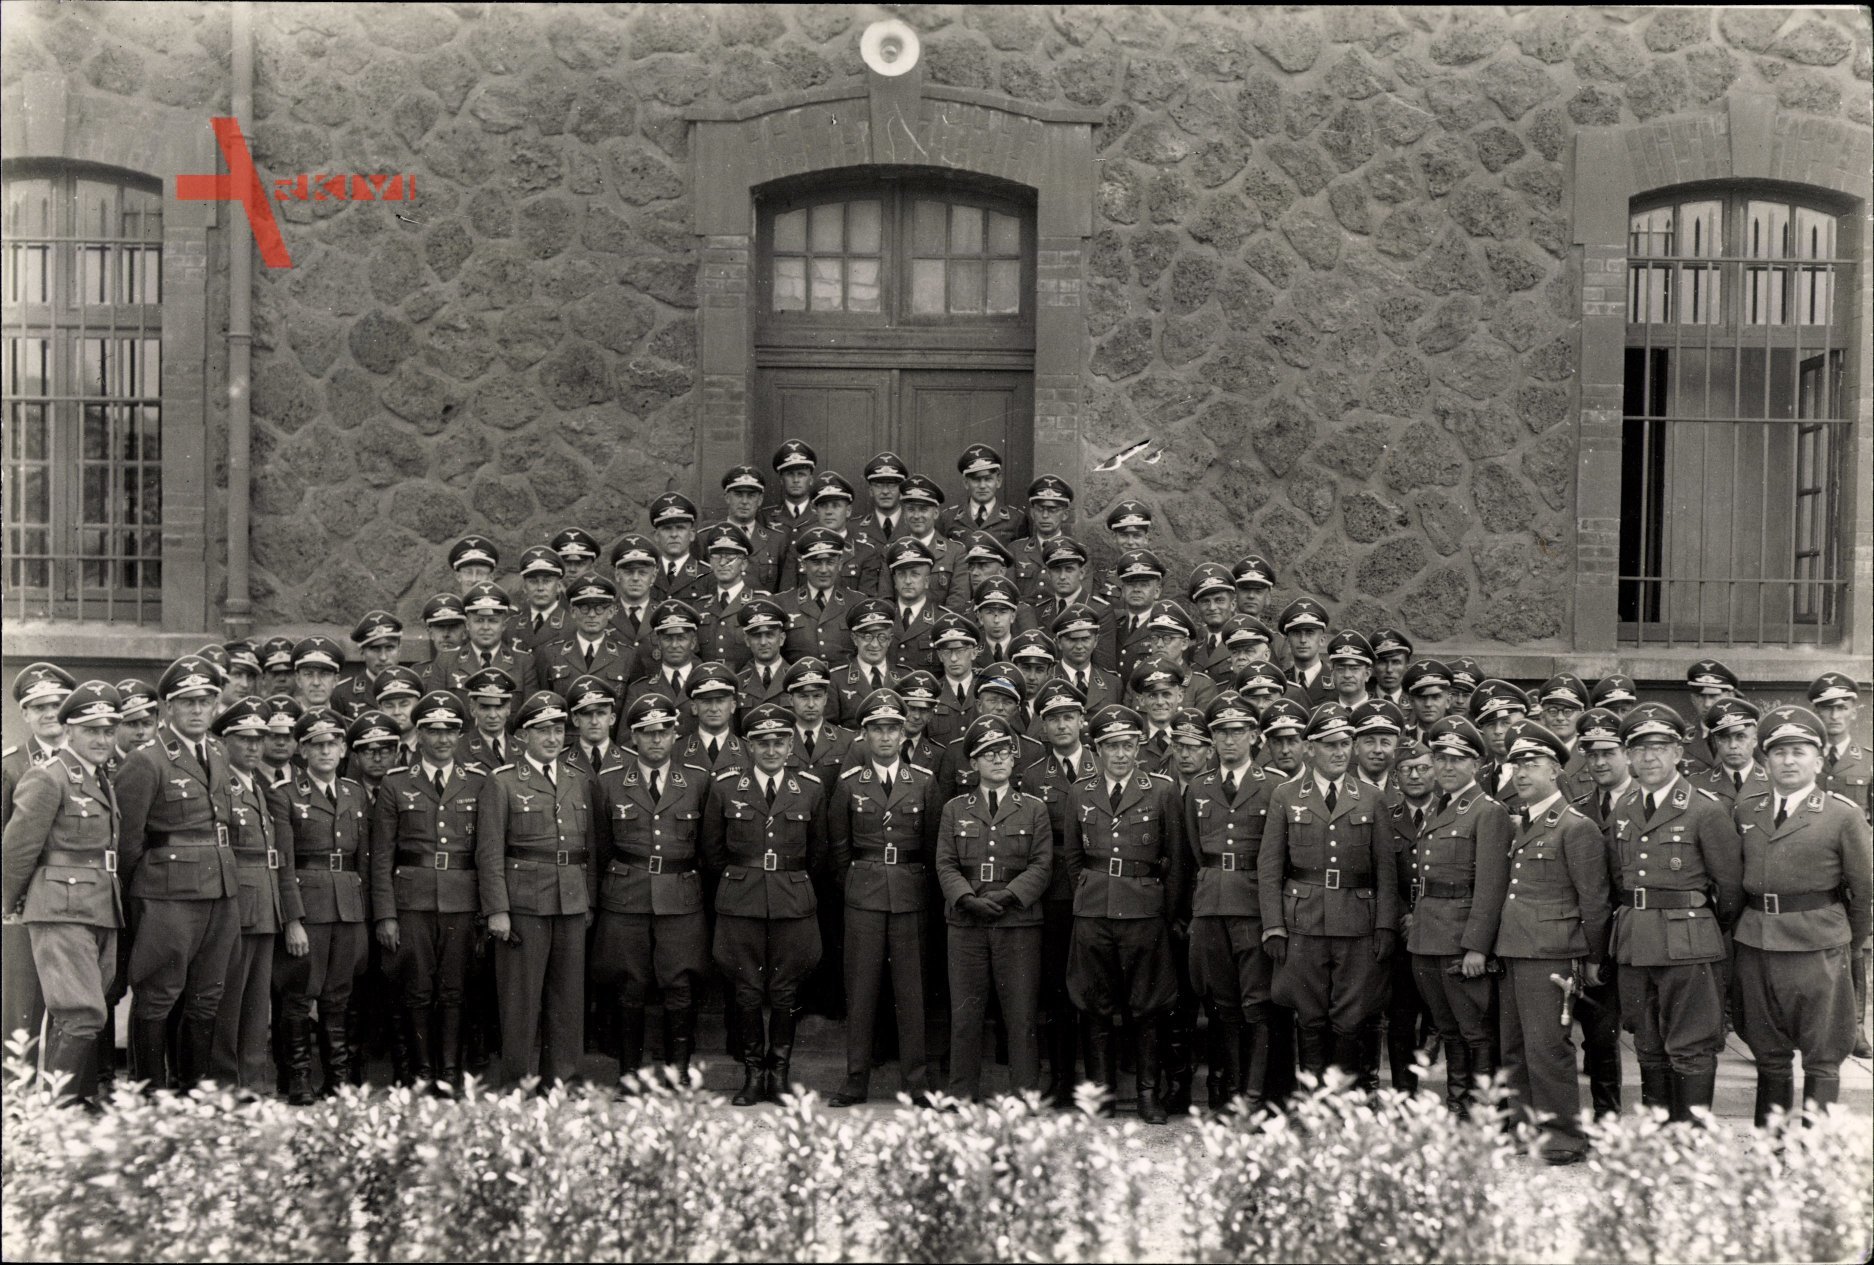 Foto Prenzlau in der Uckermark, Fliegerhorst, Luftwaffe, Uniformierte, Gruppenportrait, II. WK